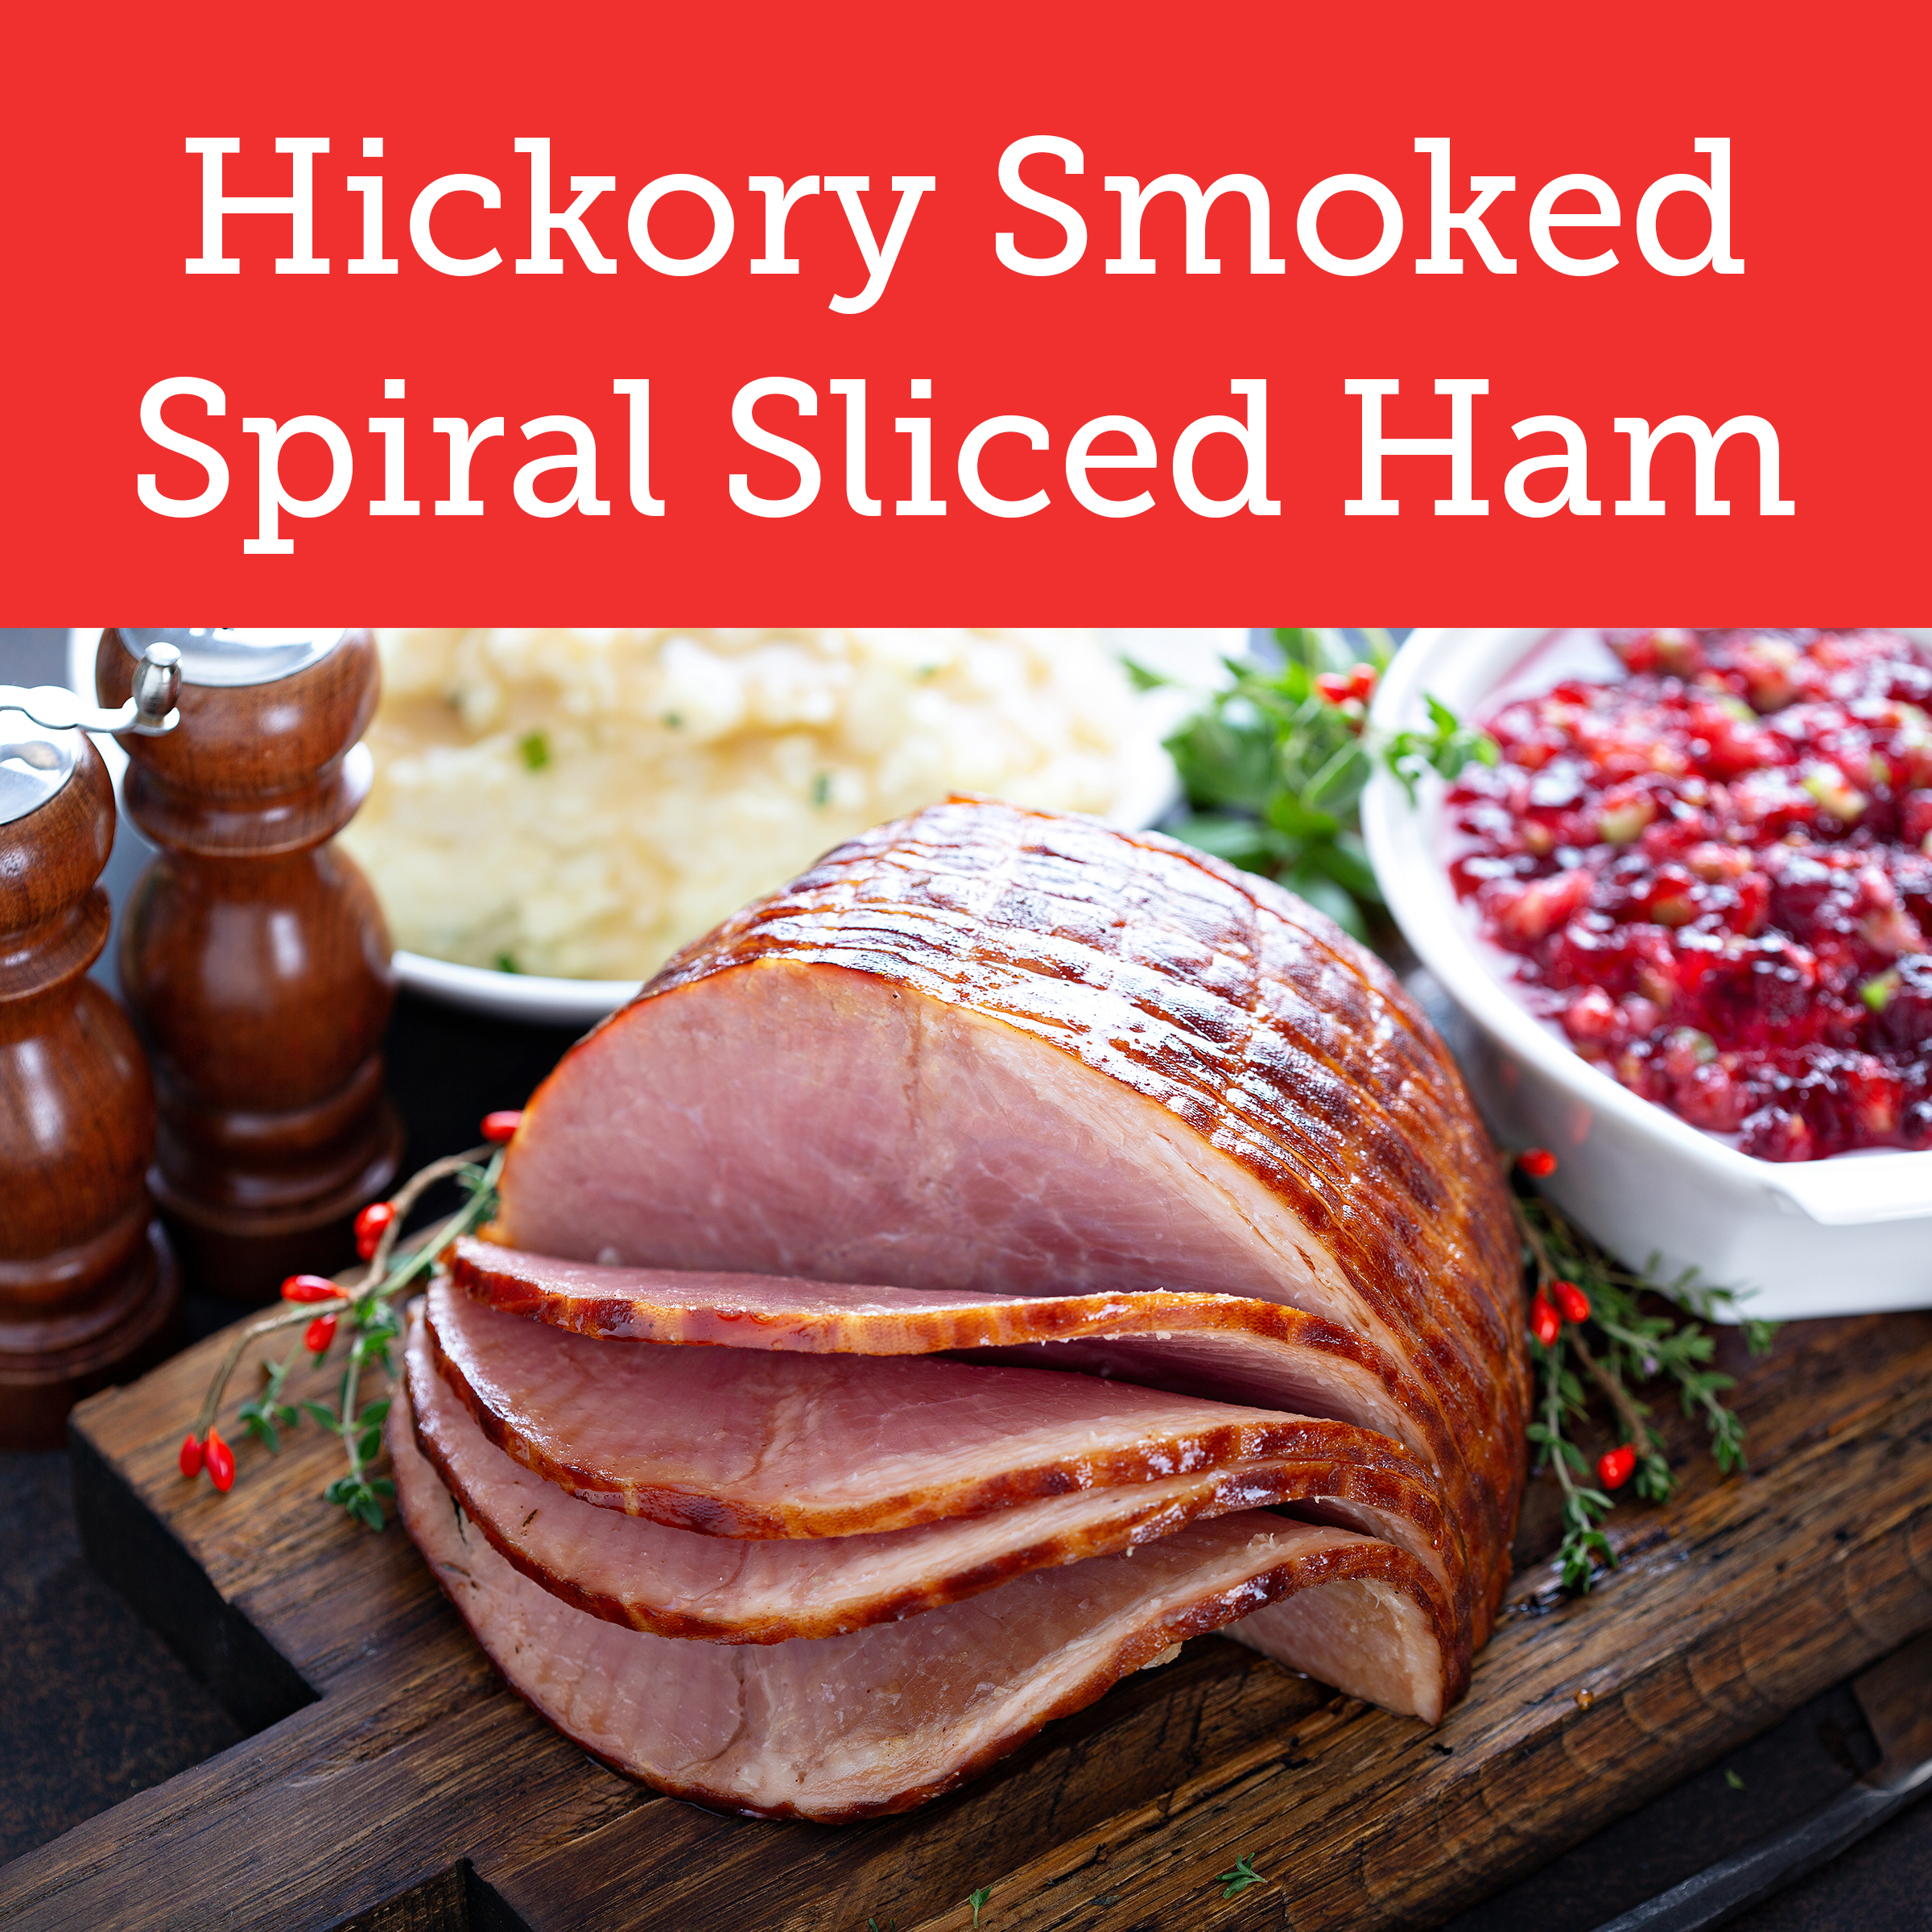 Smithfield Hickory Smoked Spiral Sliced Ham, 10.35-10.43 lb - image 2 of 8